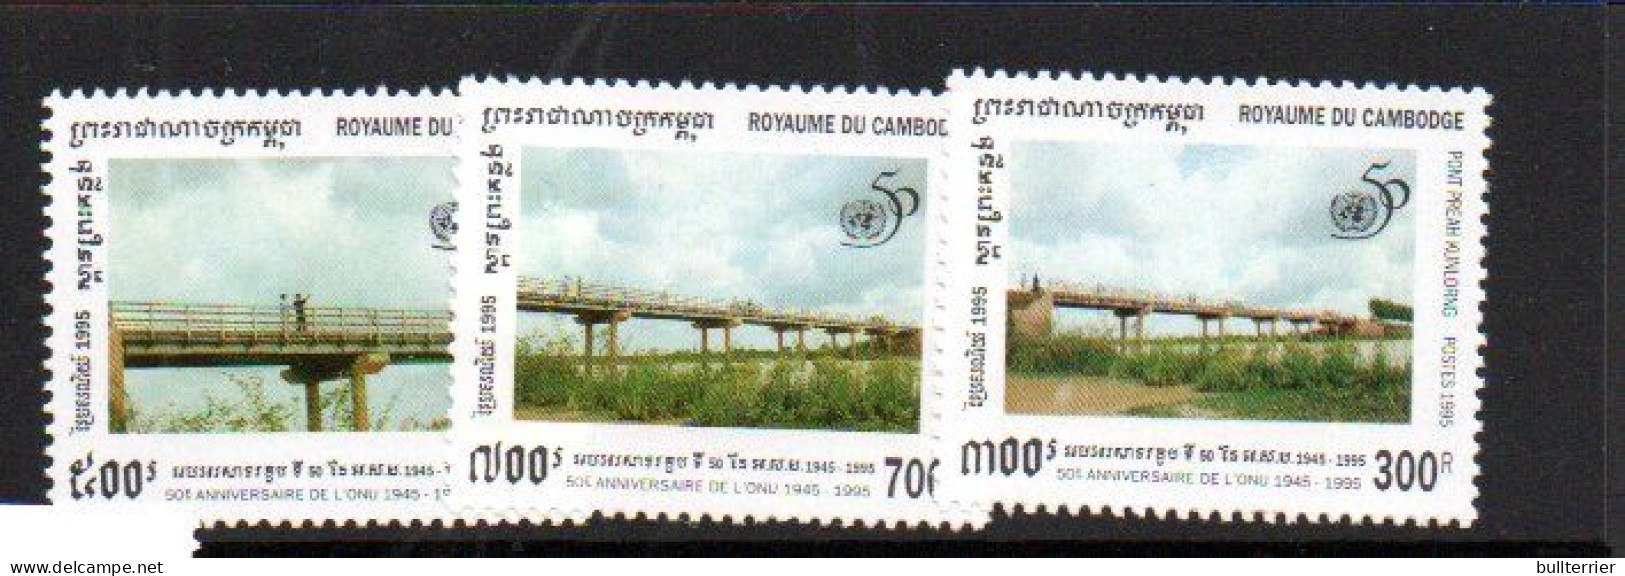 CAMBODIA -  1995 - UNITED NATIONS / BRIDGES SET OF 3 MINT NEVER HINGED - Cambodge